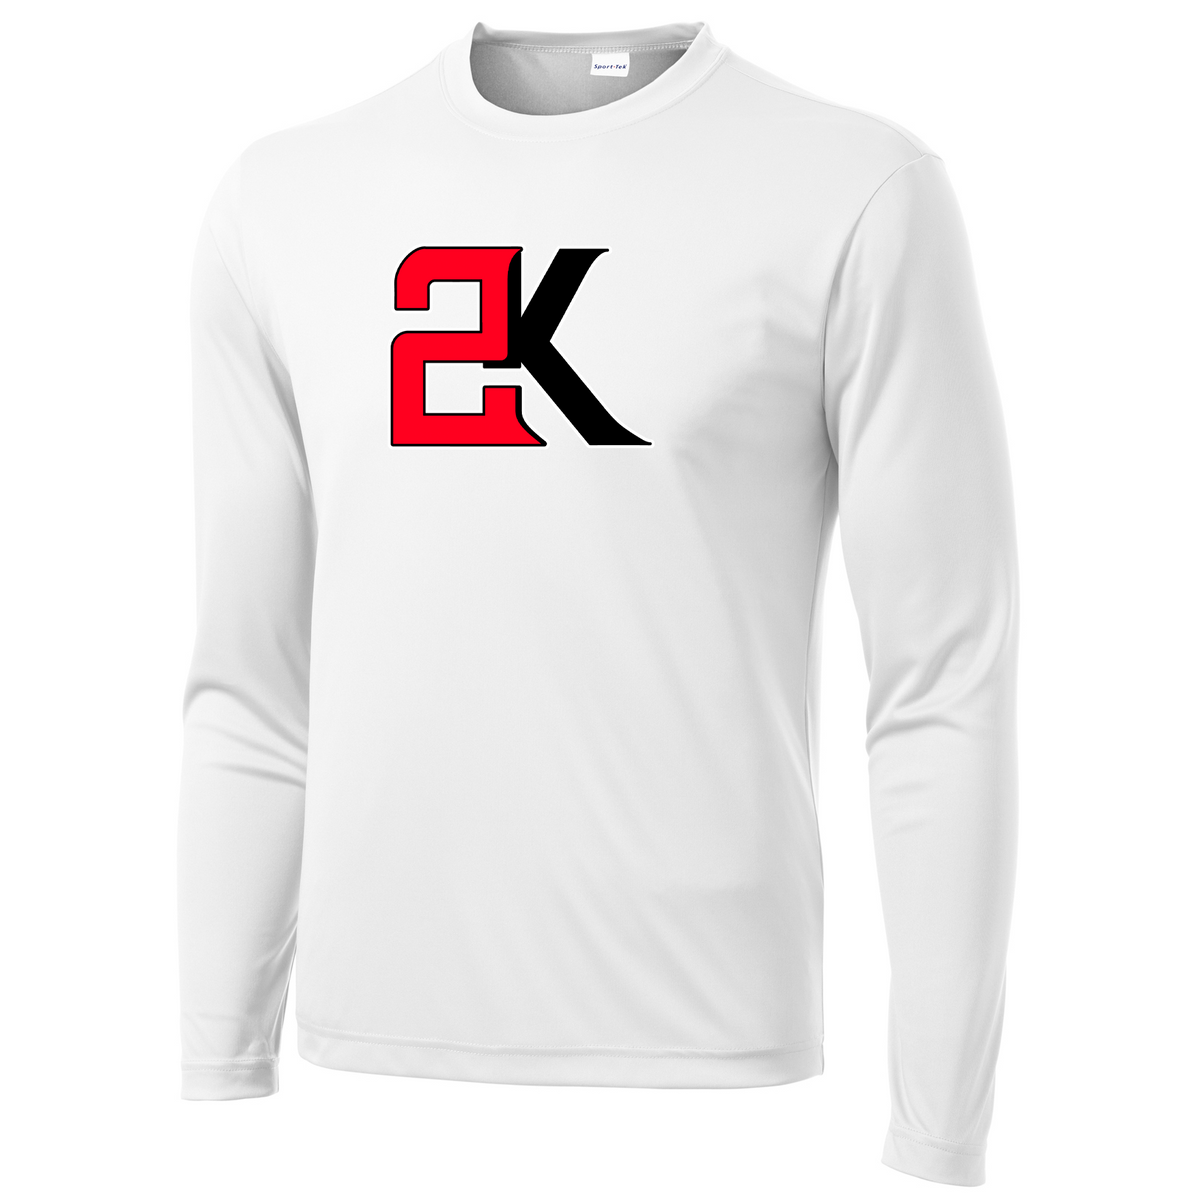 2K Softball Long Sleeve Performance Shirt